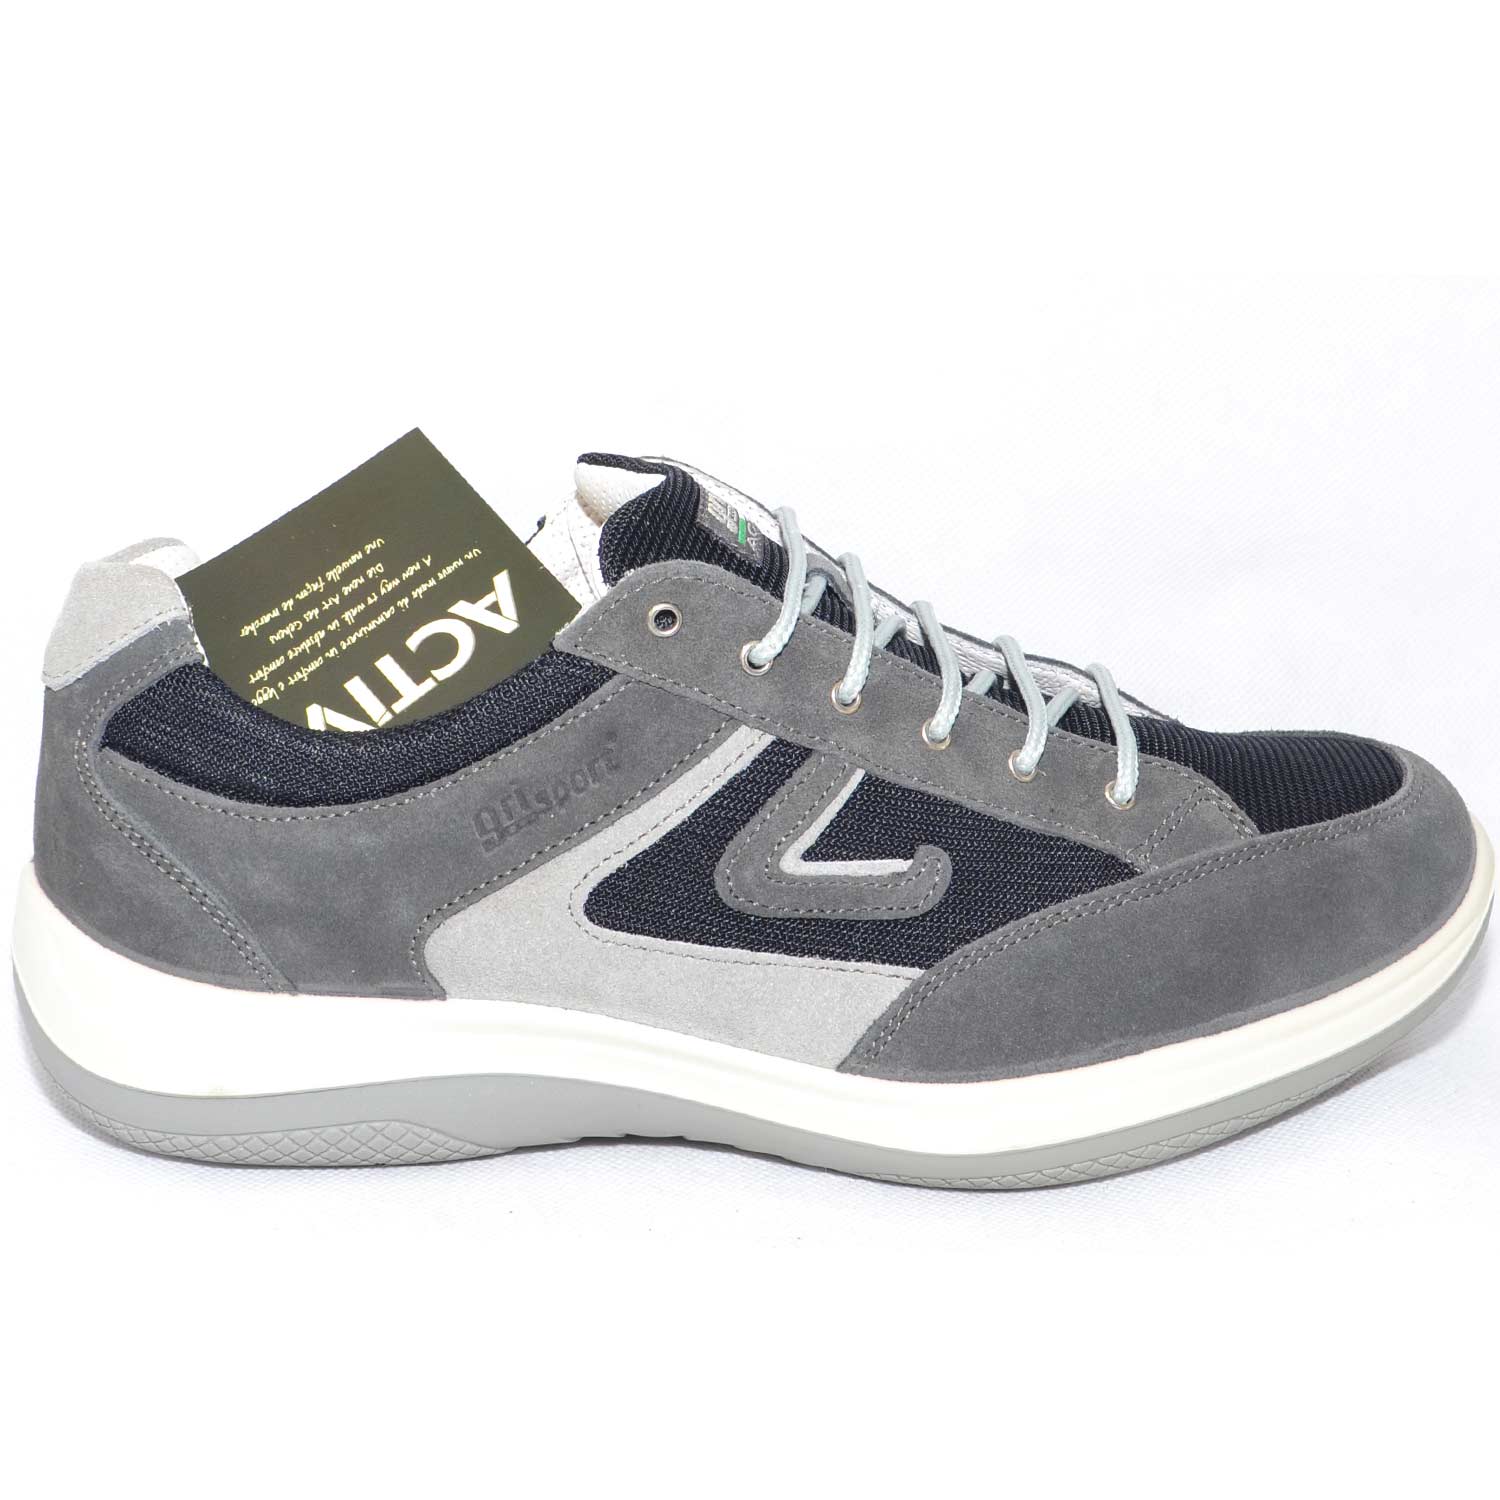 Scarpe uomo light step grisport  calzature shork vesuvio grigio camoscio tela fondo active vera pelle made in italy 4004